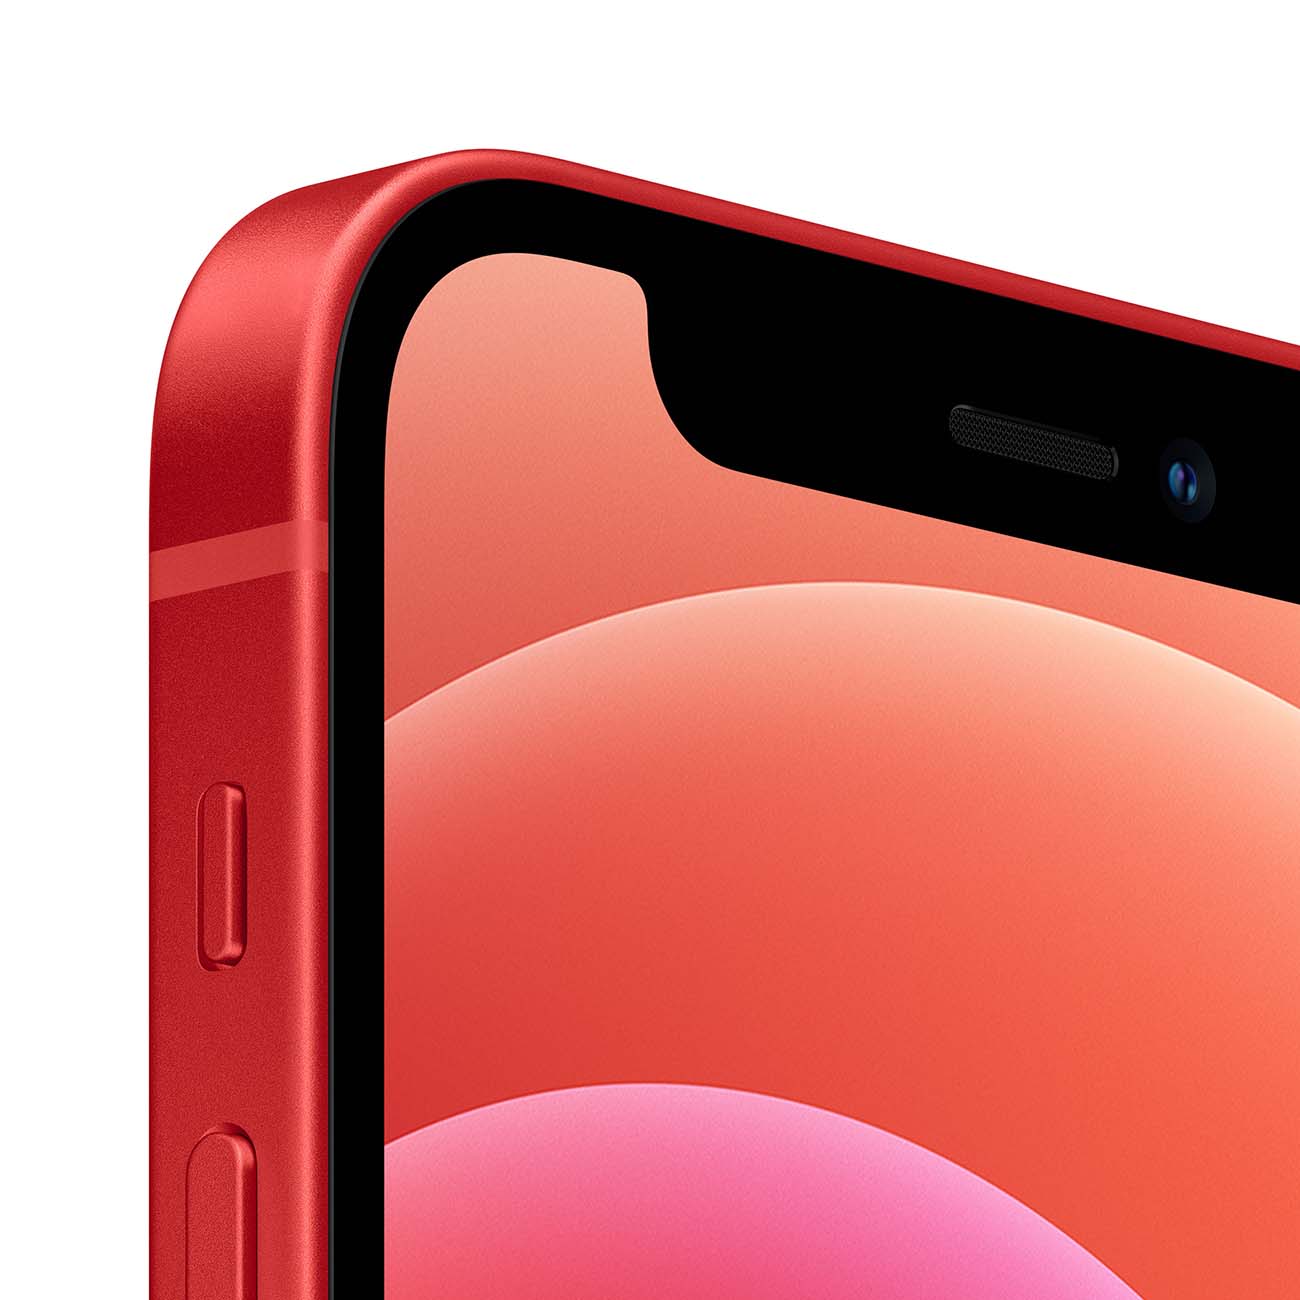 Смартфон Apple iPhone 12 mini 64GB (PRODUCT)Red - купить смартфон Эпл iPhone  12 mini 64GB (PRODUCT)Red, цены в интернет-магазине Эльдорадо в Москве,  доставка по РФ